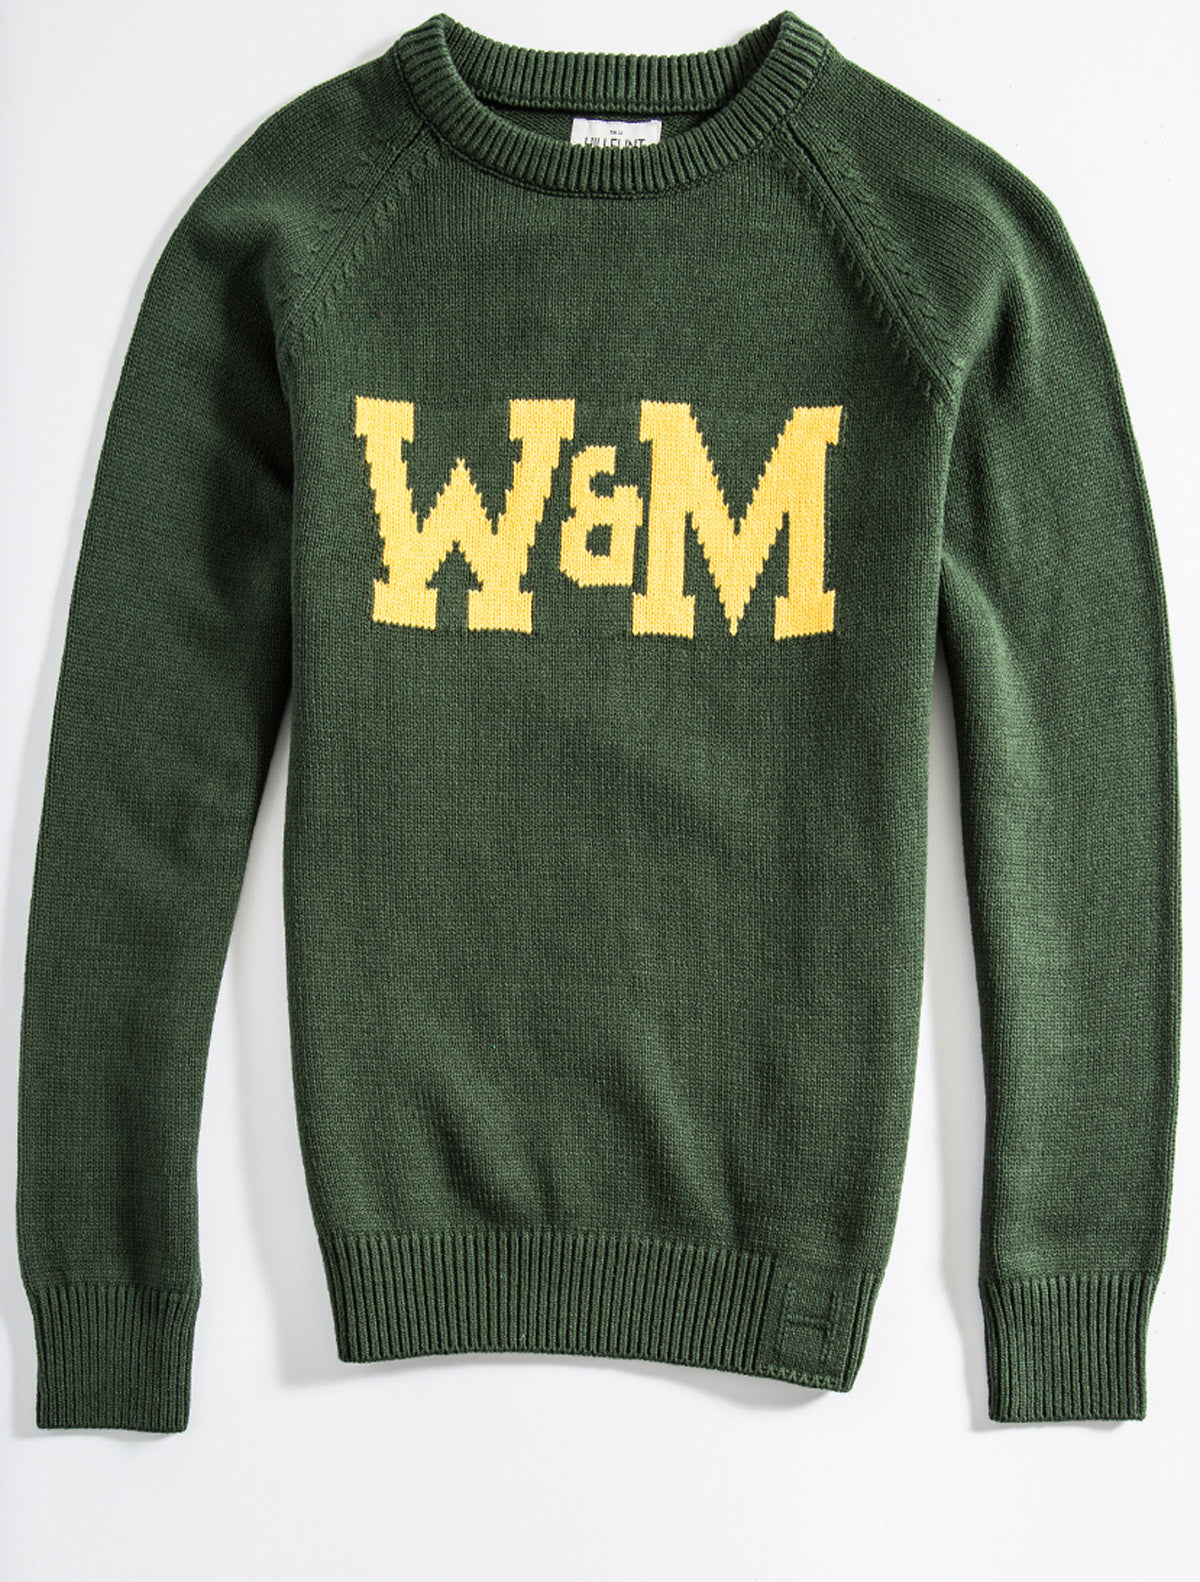 Cotton William & Mary School Sweater – Hillflint